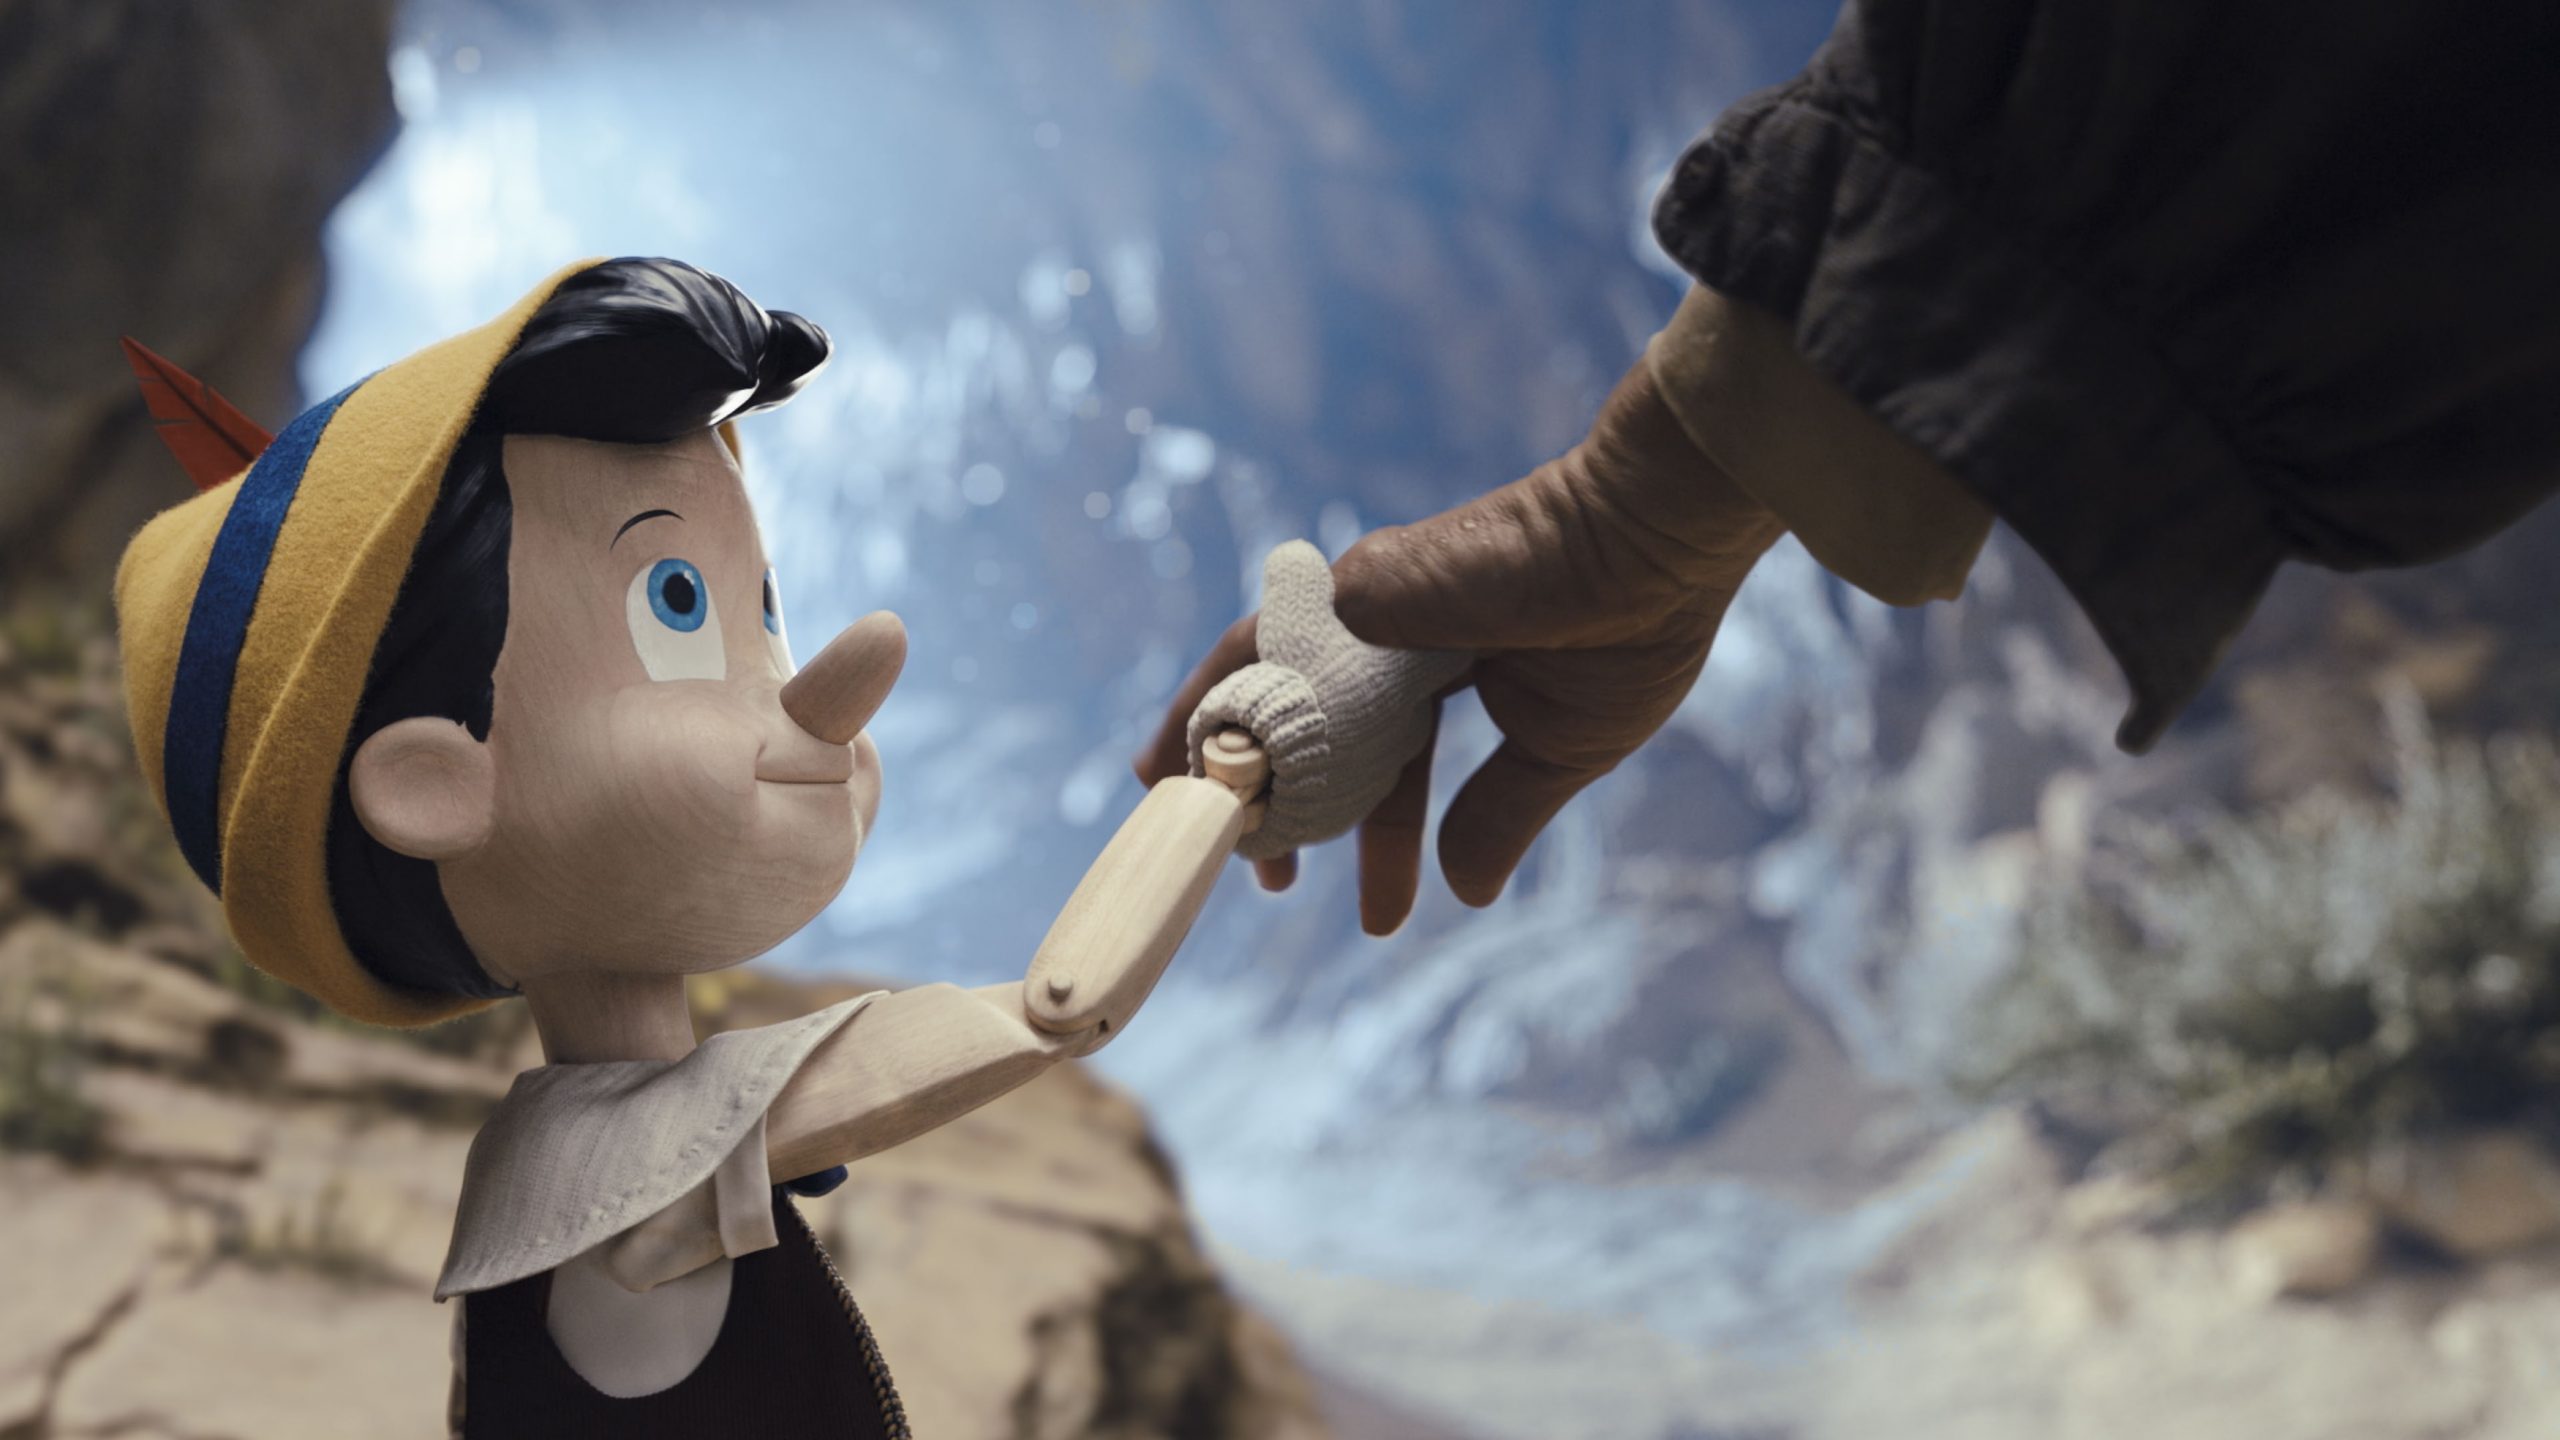 Pinocchio (voiced by Benjamin Evan Ainsworth) in Disney's live-action PINOCCHIO, exclusively on Disney+.  Photo courtesy of Disney Enterprises, Inc. © 2022 Disney Enterprises, Inc. All Rights Reserved.